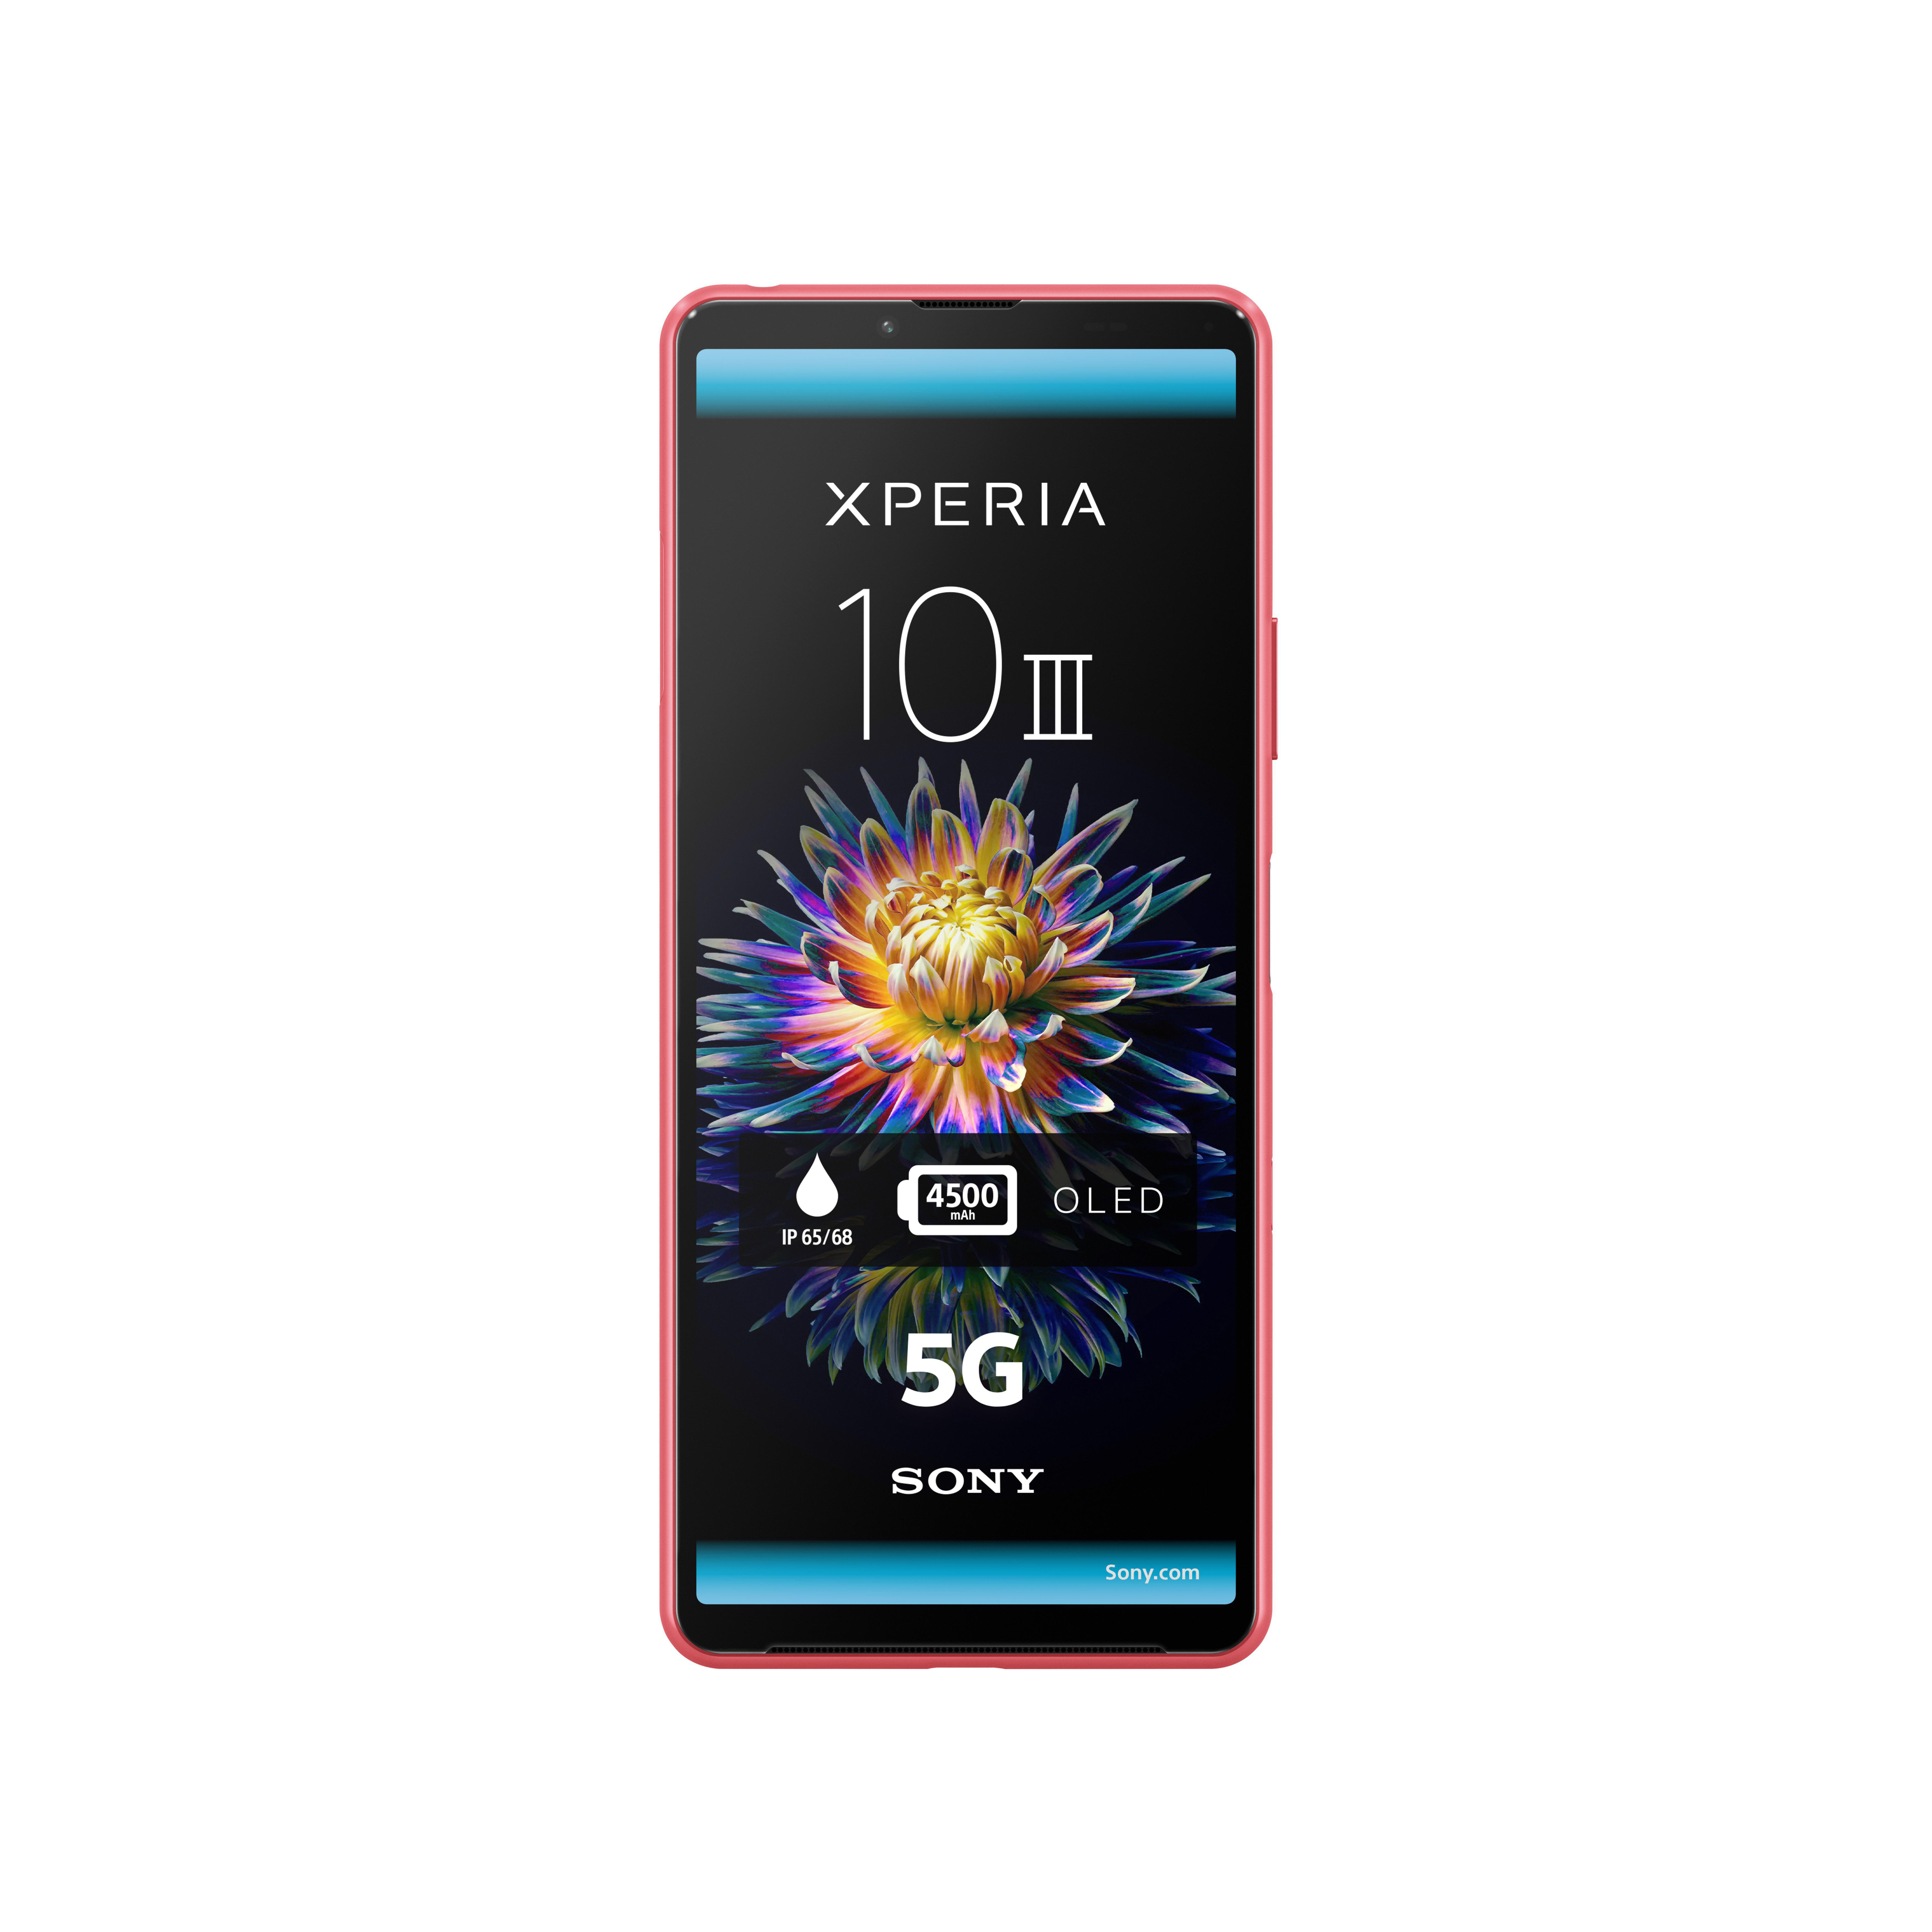 SONY Xperia 5G 128 Display 21:9 SIM Dual Pink GB 10 III